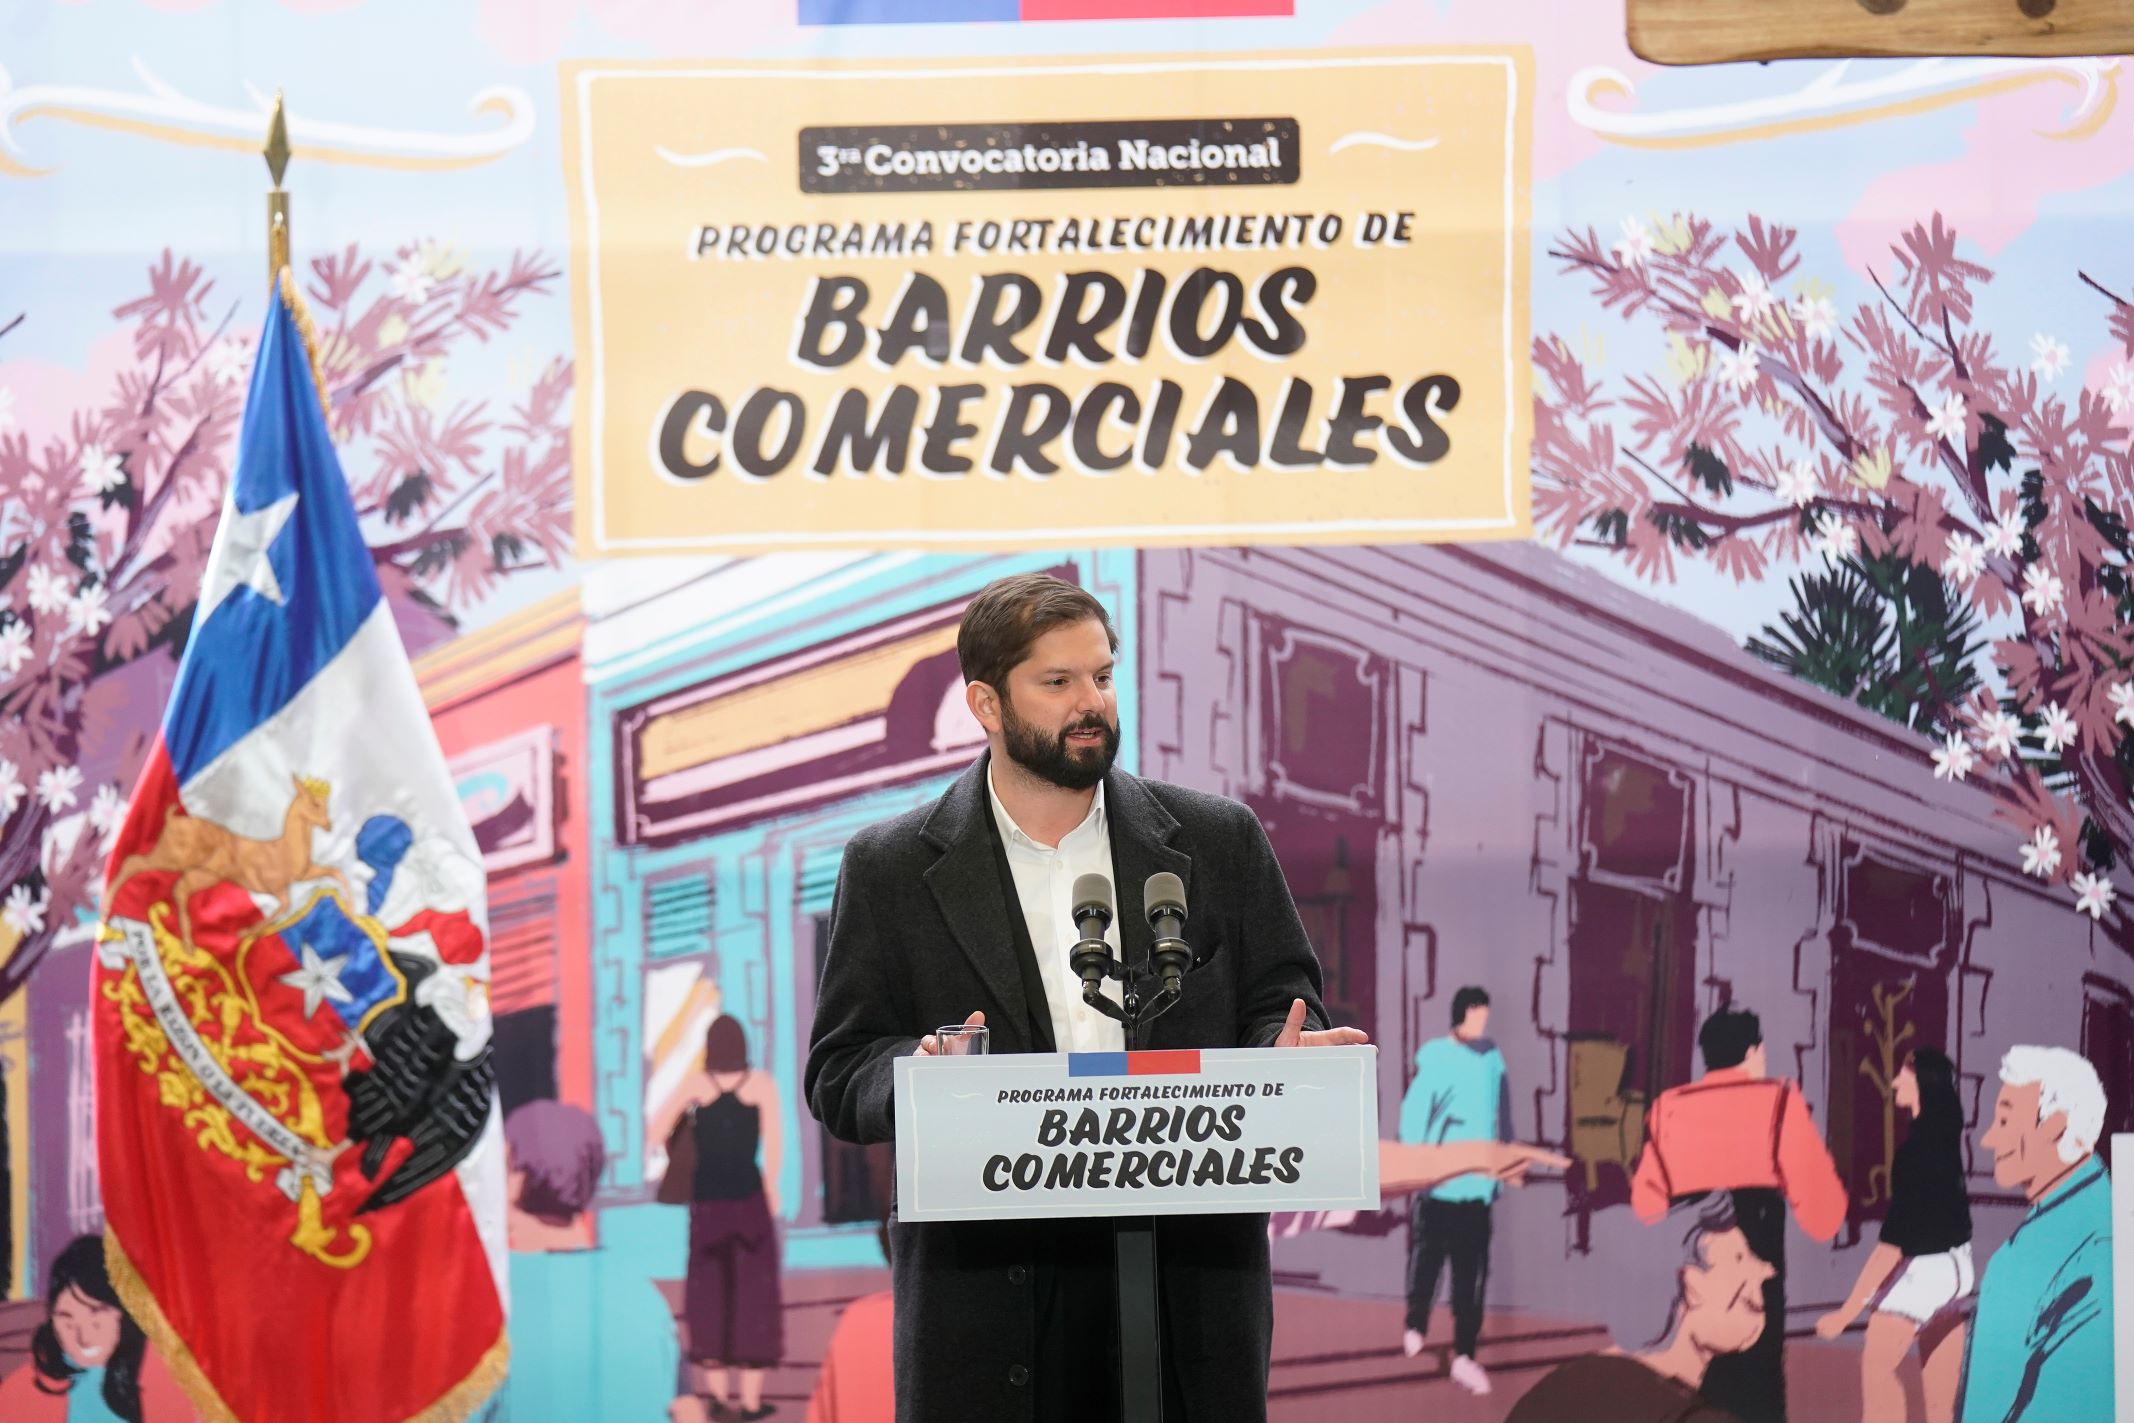 Presidente Gabriel Boric lanza nueva convocatoria nacional para fortalecer barrios comerciales a través de SERCOTEC